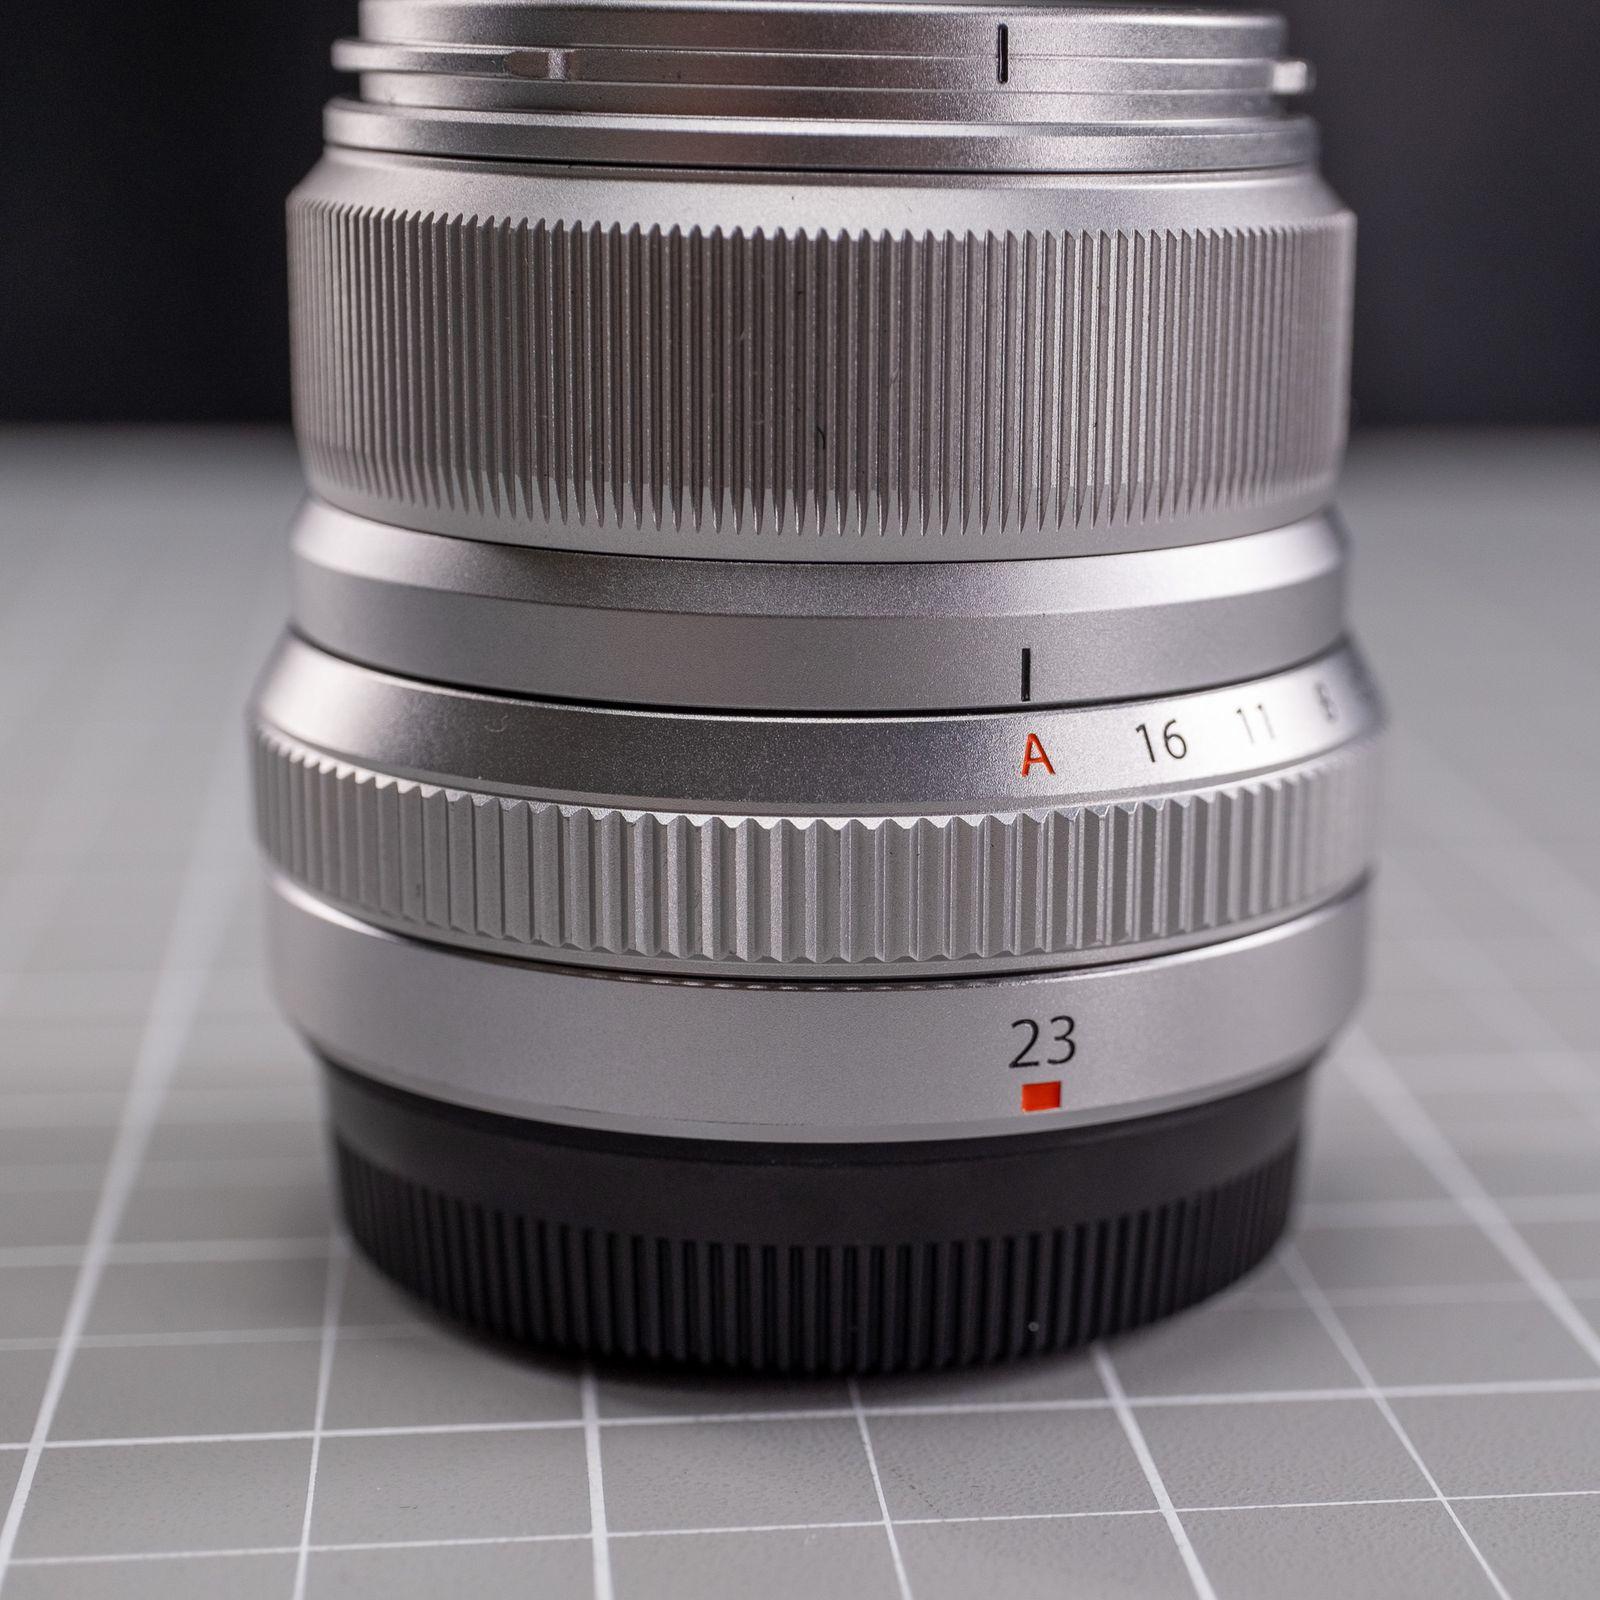 Fujifilm XF 23mm f/2.0 R WR Lens